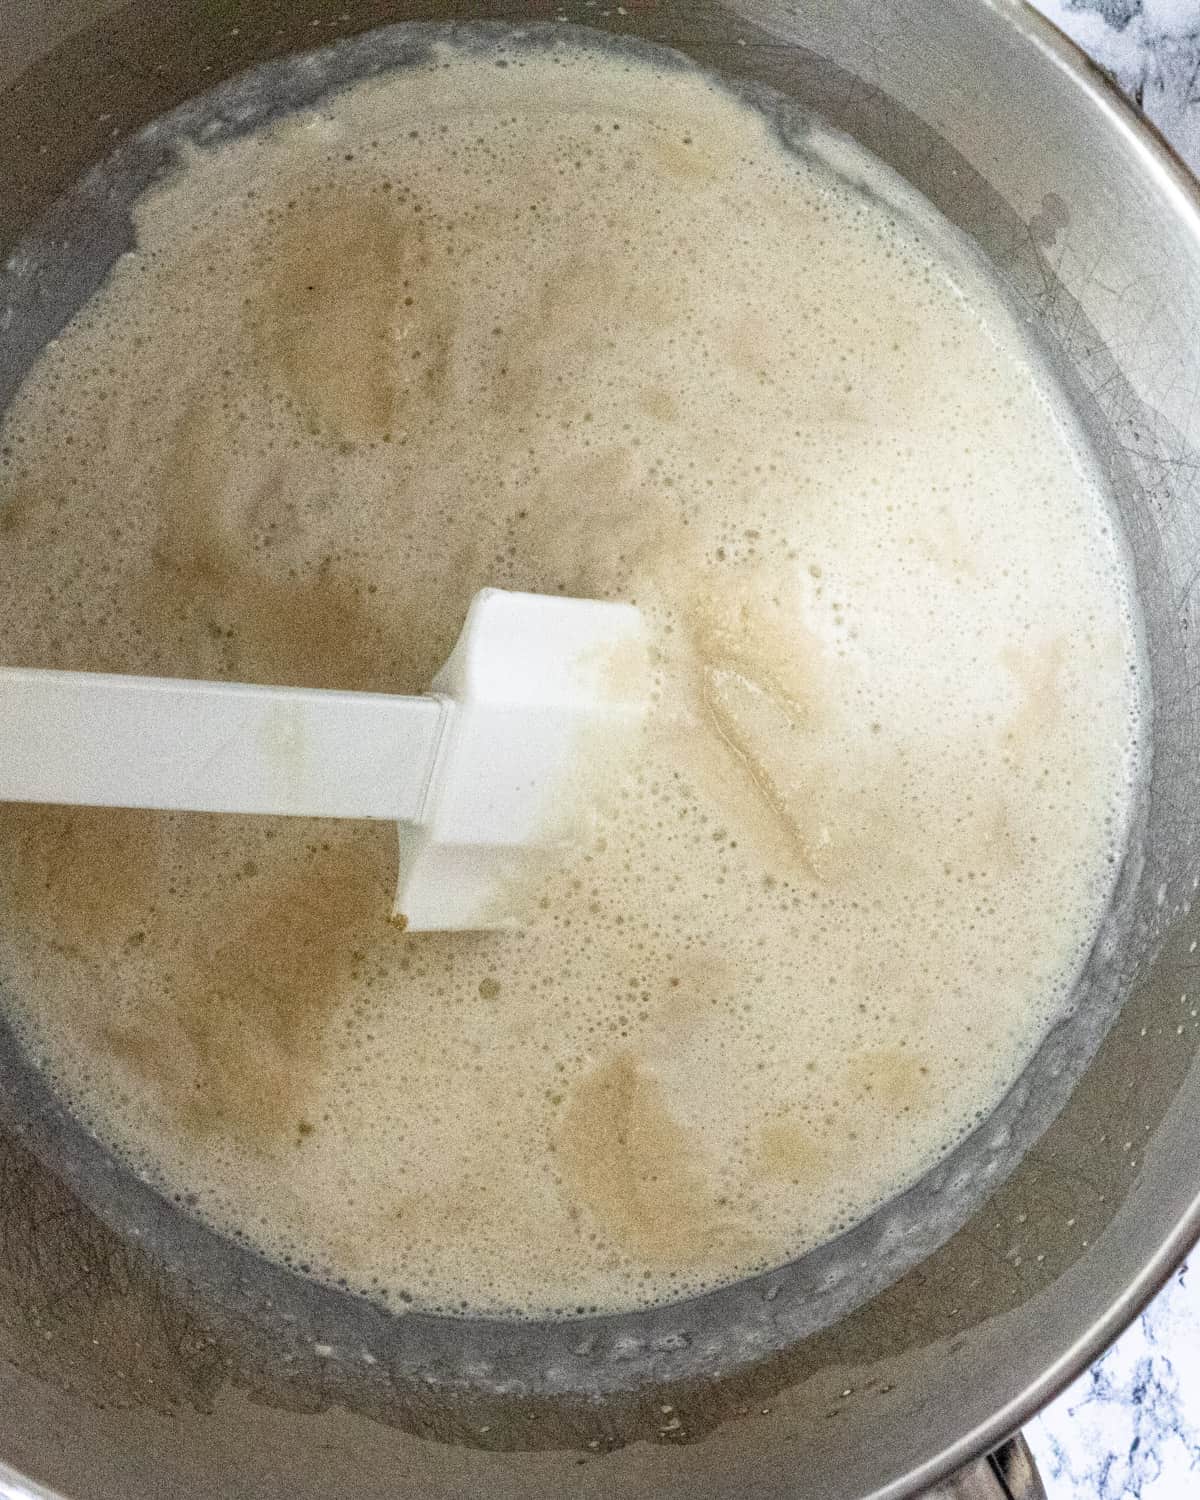 Beige liquid is bubbling in a metal bowl.